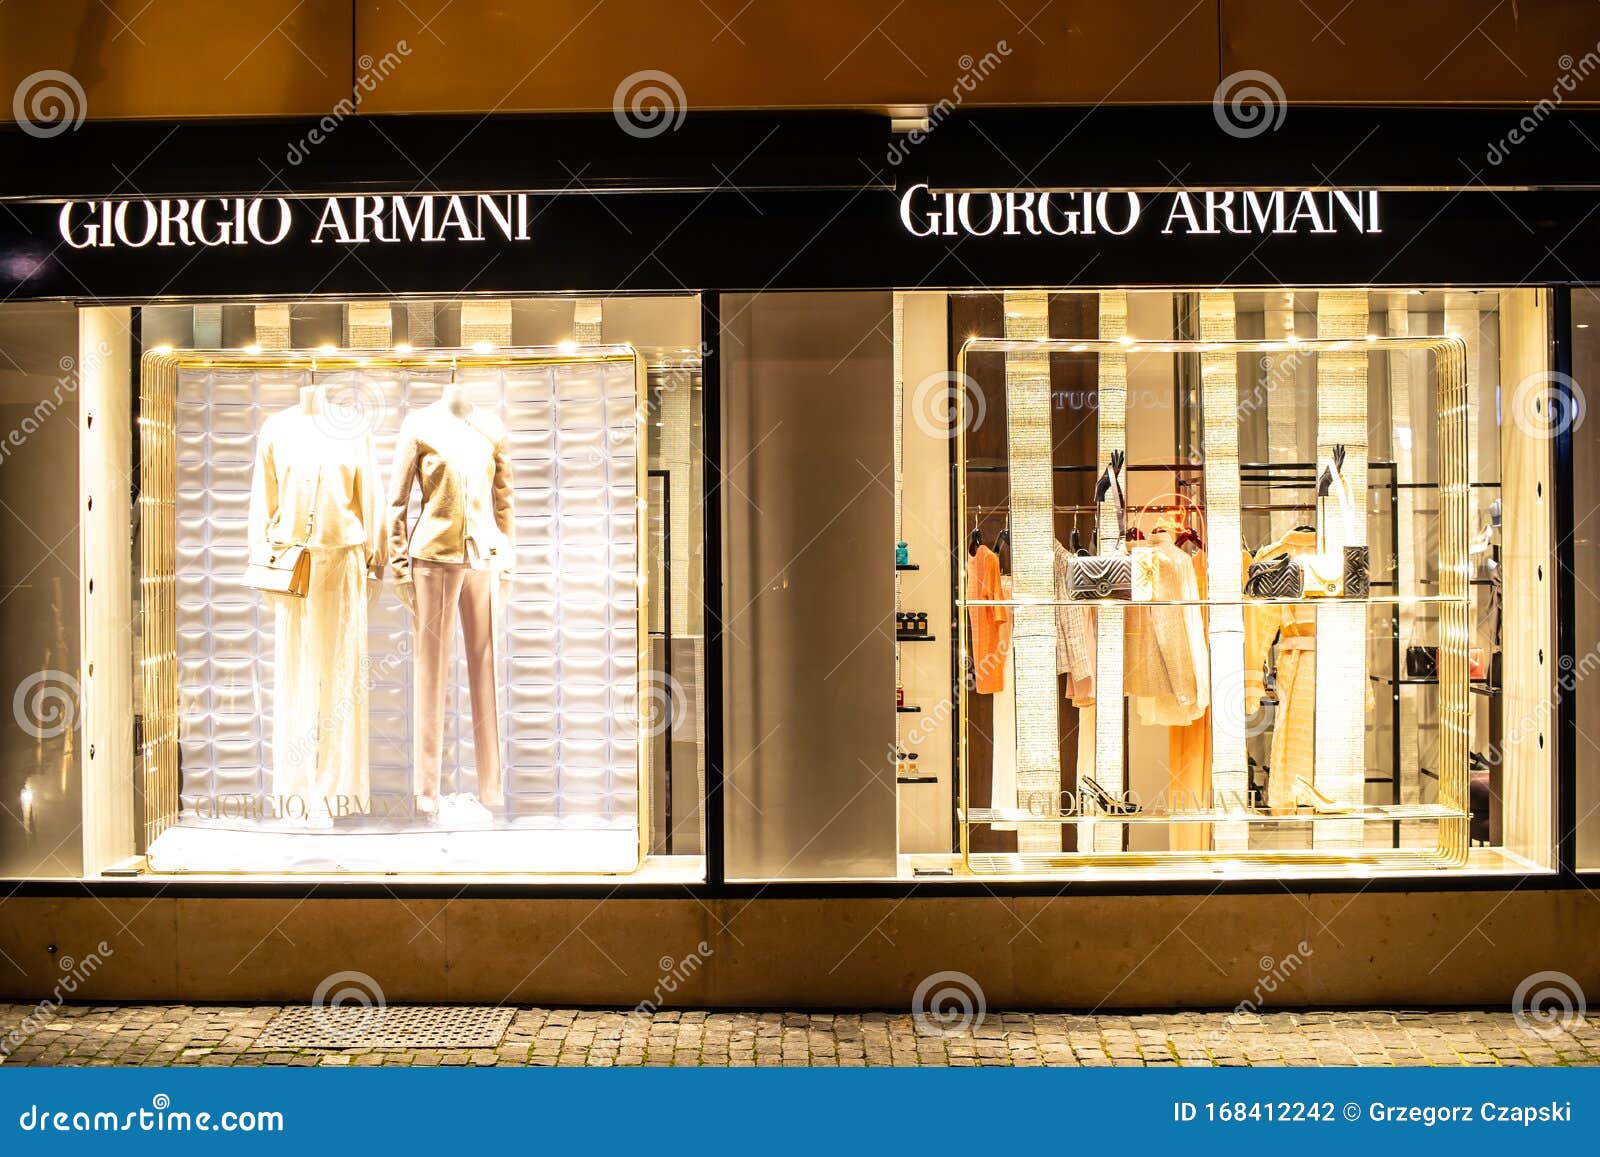 samen les harpoen Giorgio Armani Fashion Store, Window Shop, Clothes, Shoes on Display for  Sale, Modern Giorgio Armani Fashion House Editorial Photography - Image of  business, fashion: 168412242